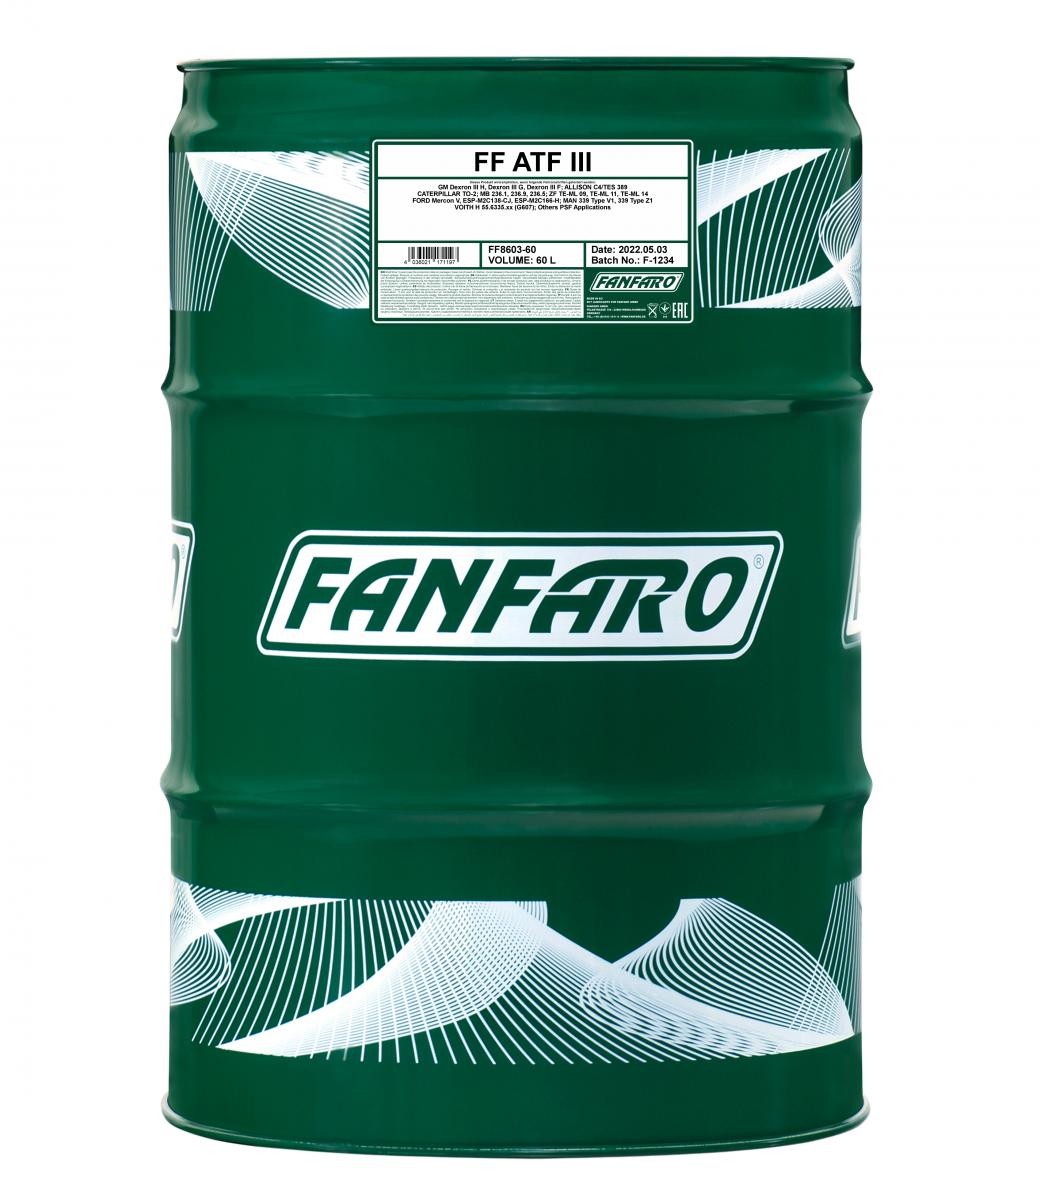 FF8603-60 FANFARO Automatikgetriebeöl für IVECO online bestellen